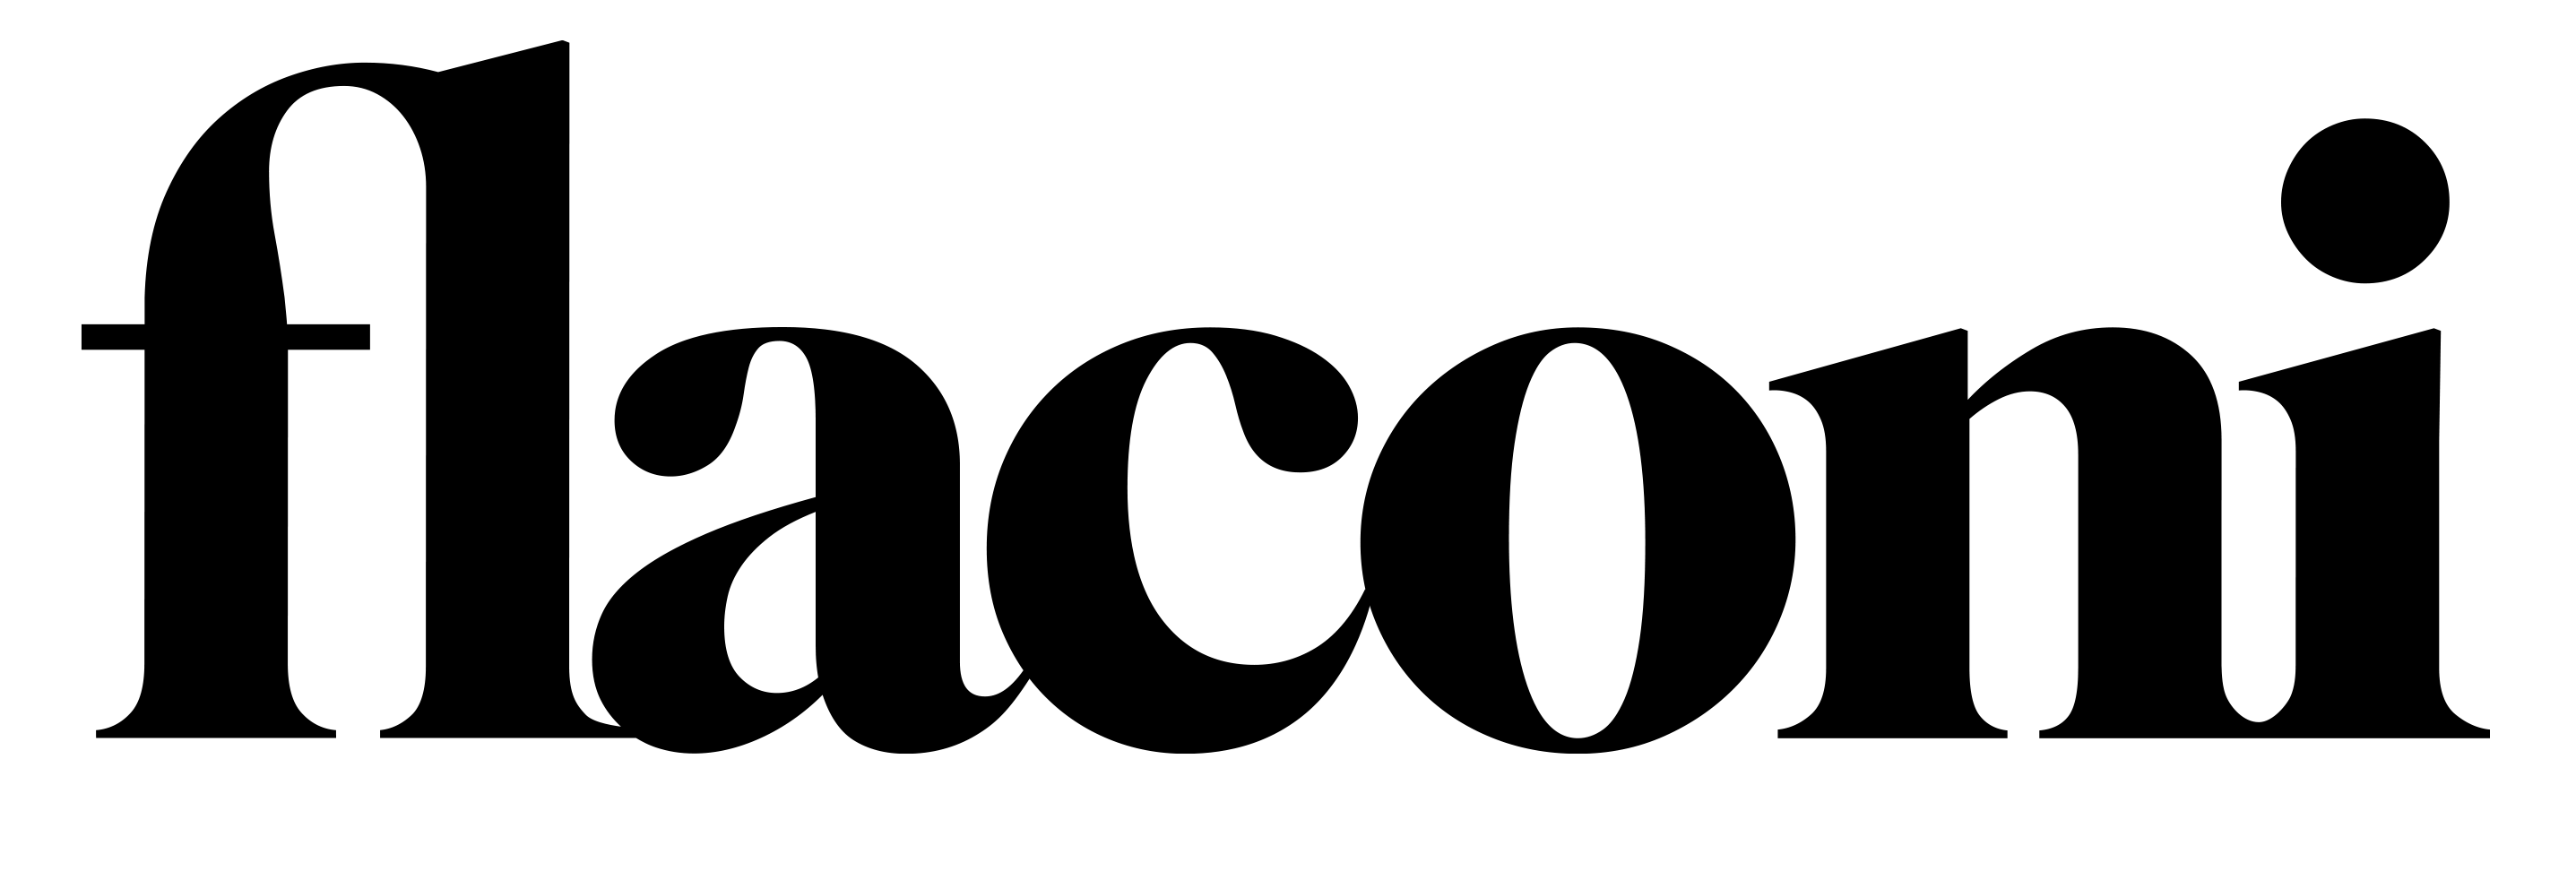 Flaconi-logo